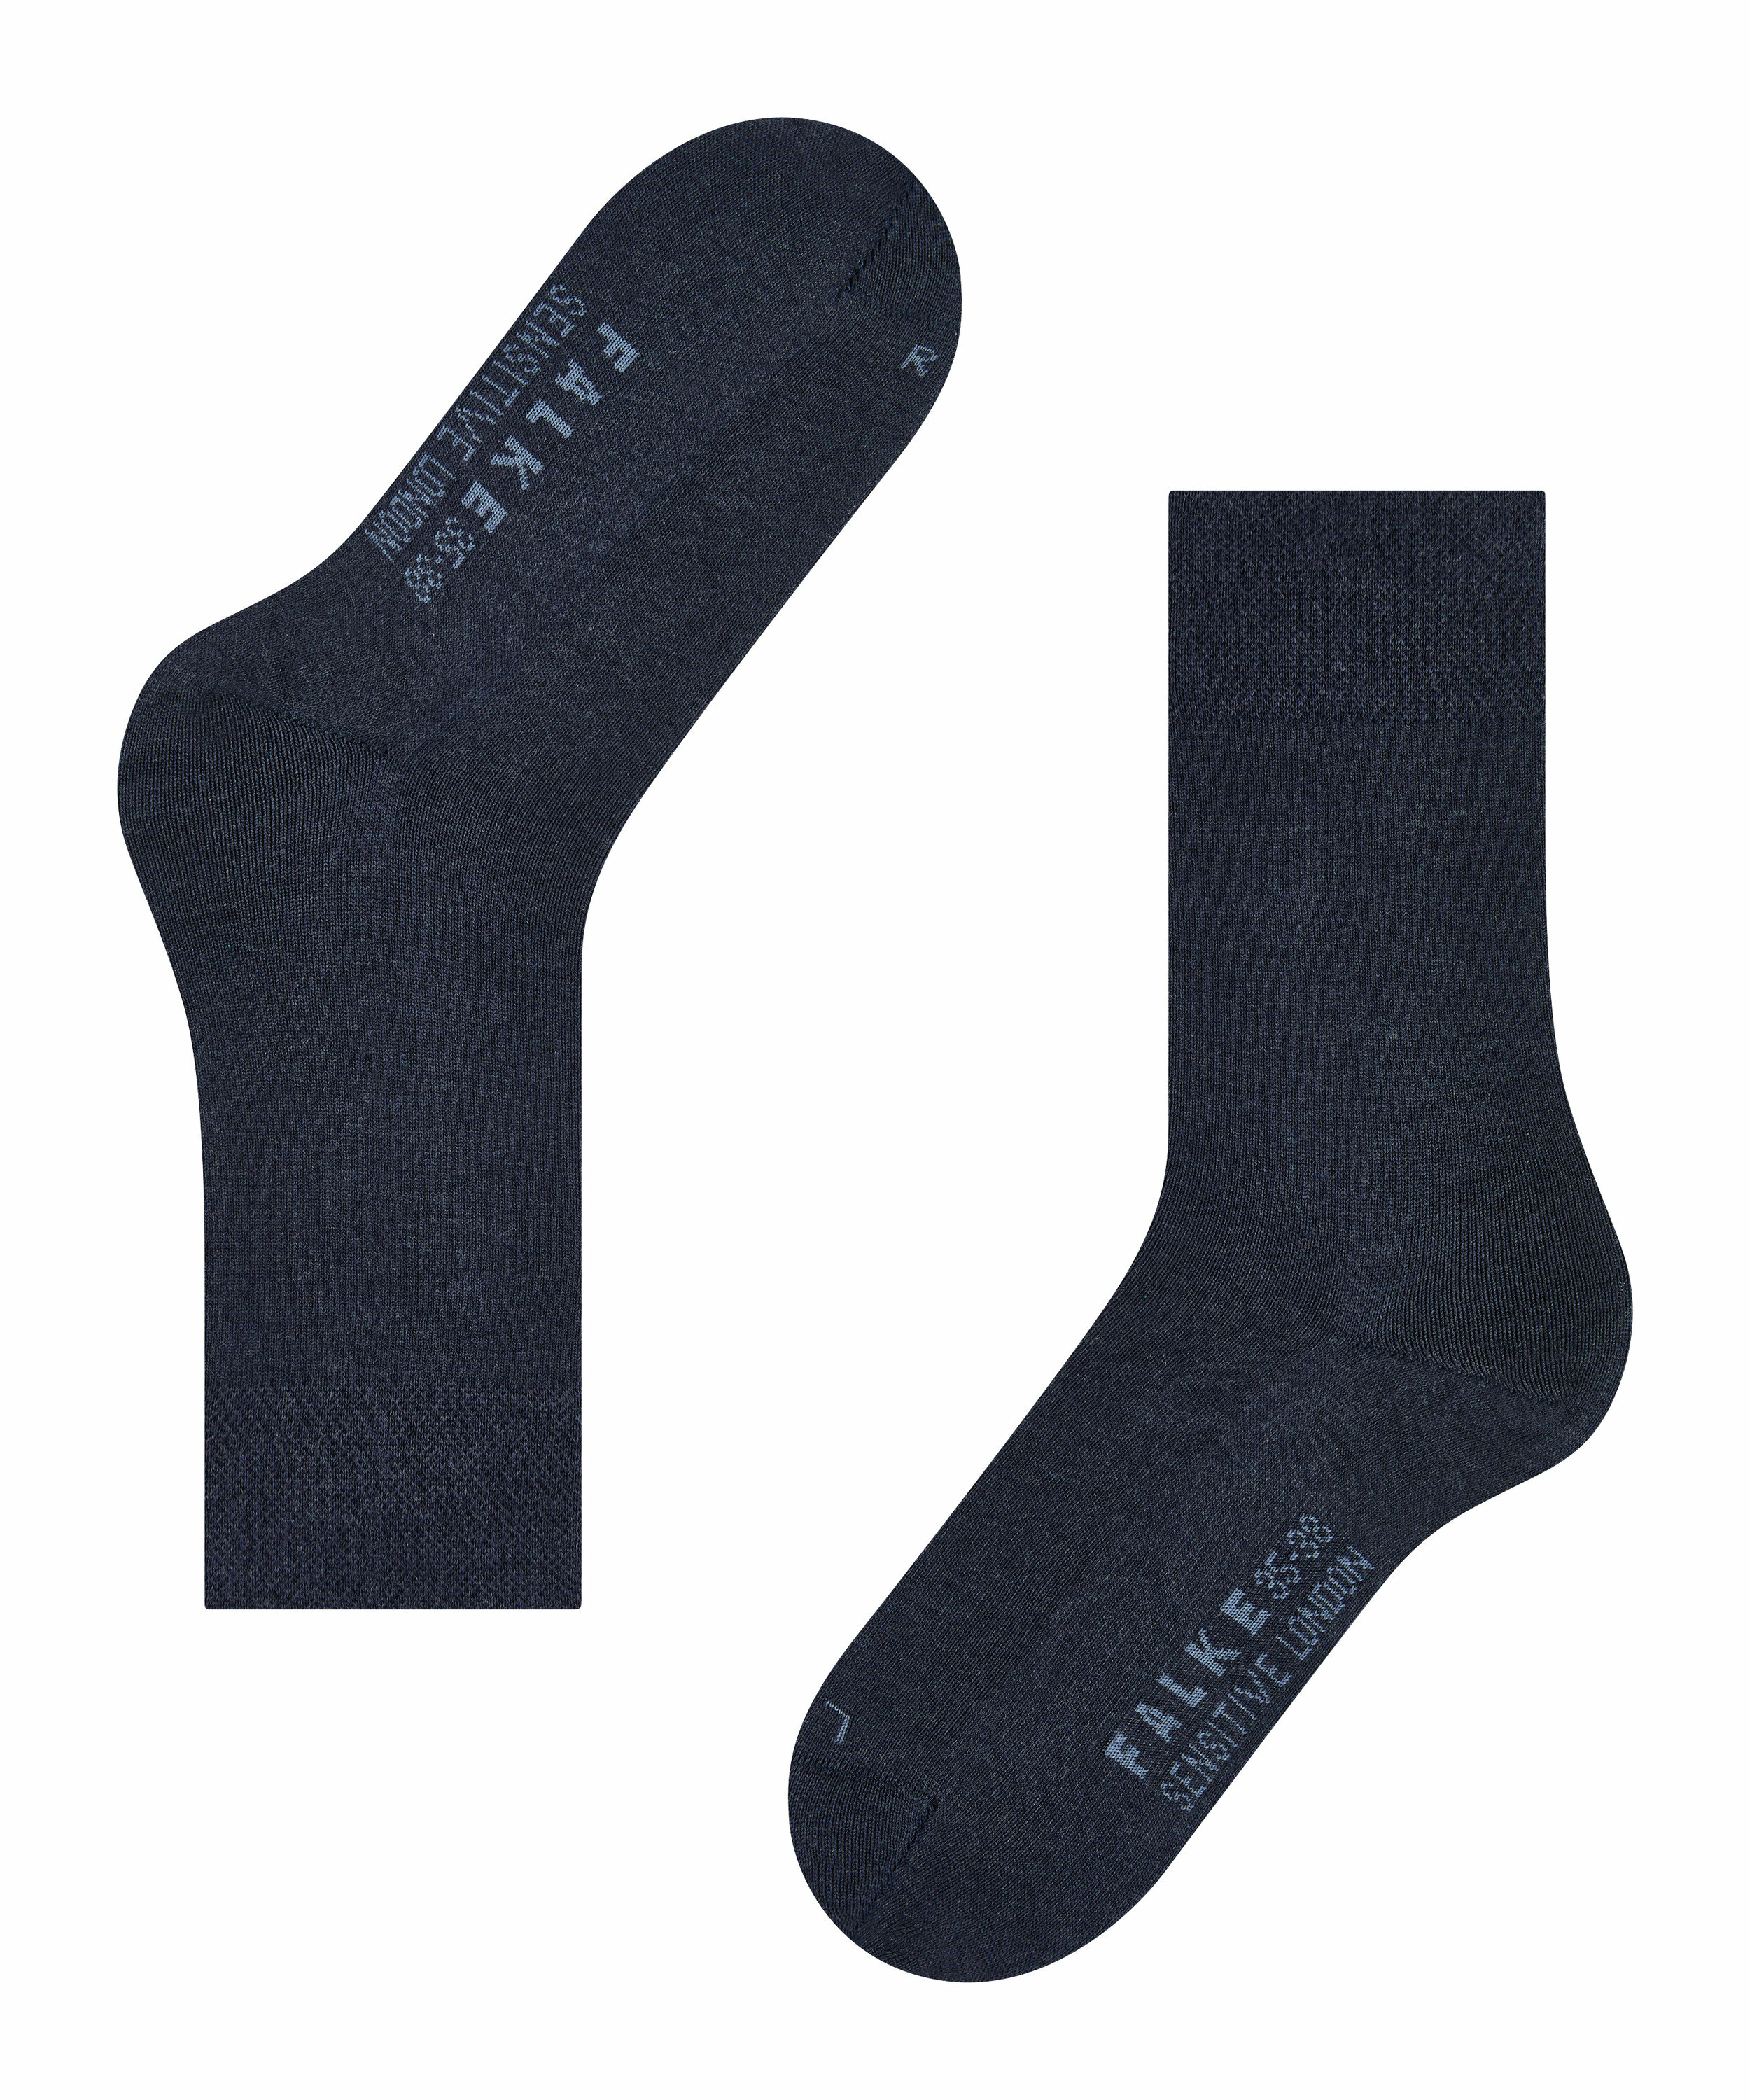 Baumwoll-Socke "Sensitive London" ohne Gummi-Druck